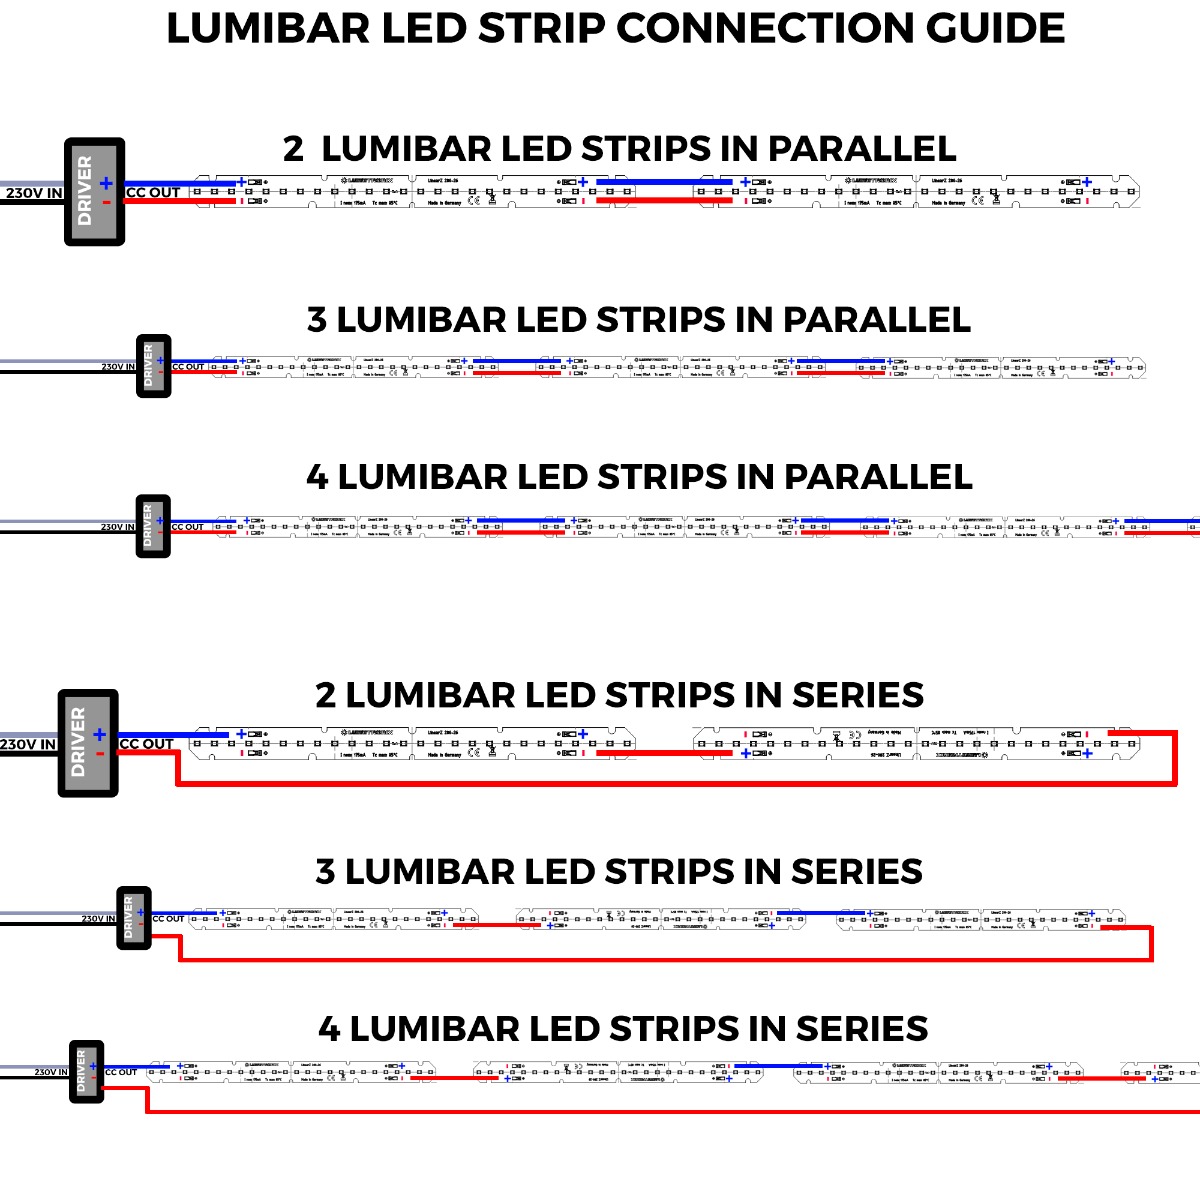 LumiBar-28-3098+ Toshiba-SSC LED Strip Sunlike full spectrum CRI98 pure white 4000K 756lm 350mA 16V 24 LEDs 28cm module (2700lm/m 21W/m)